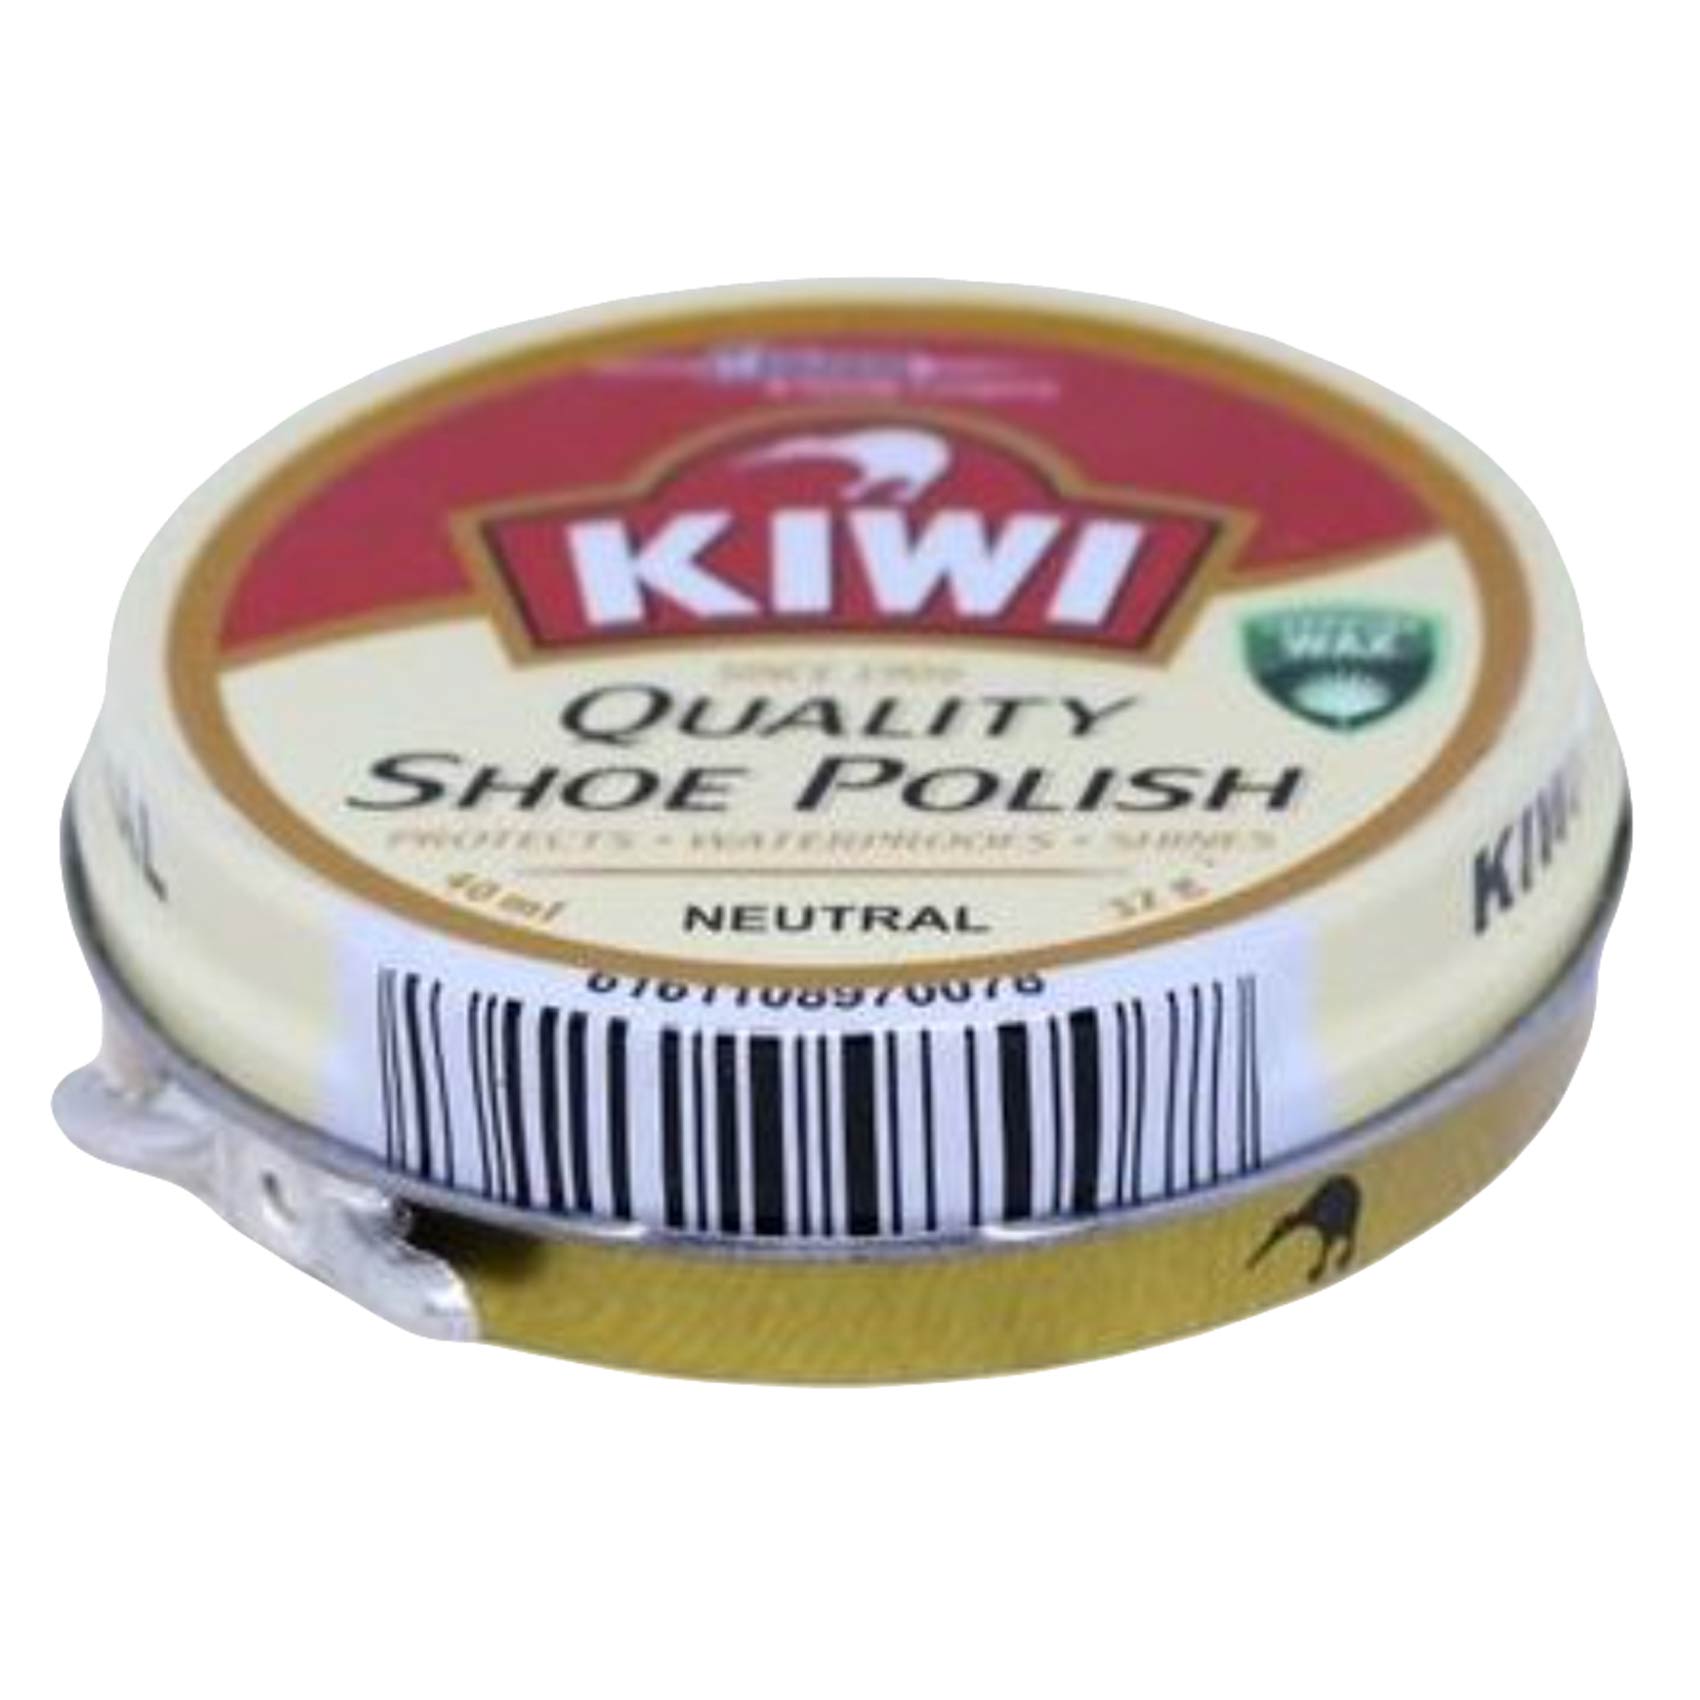 Kiwi Quality Shoe Polish Neutral 40ml